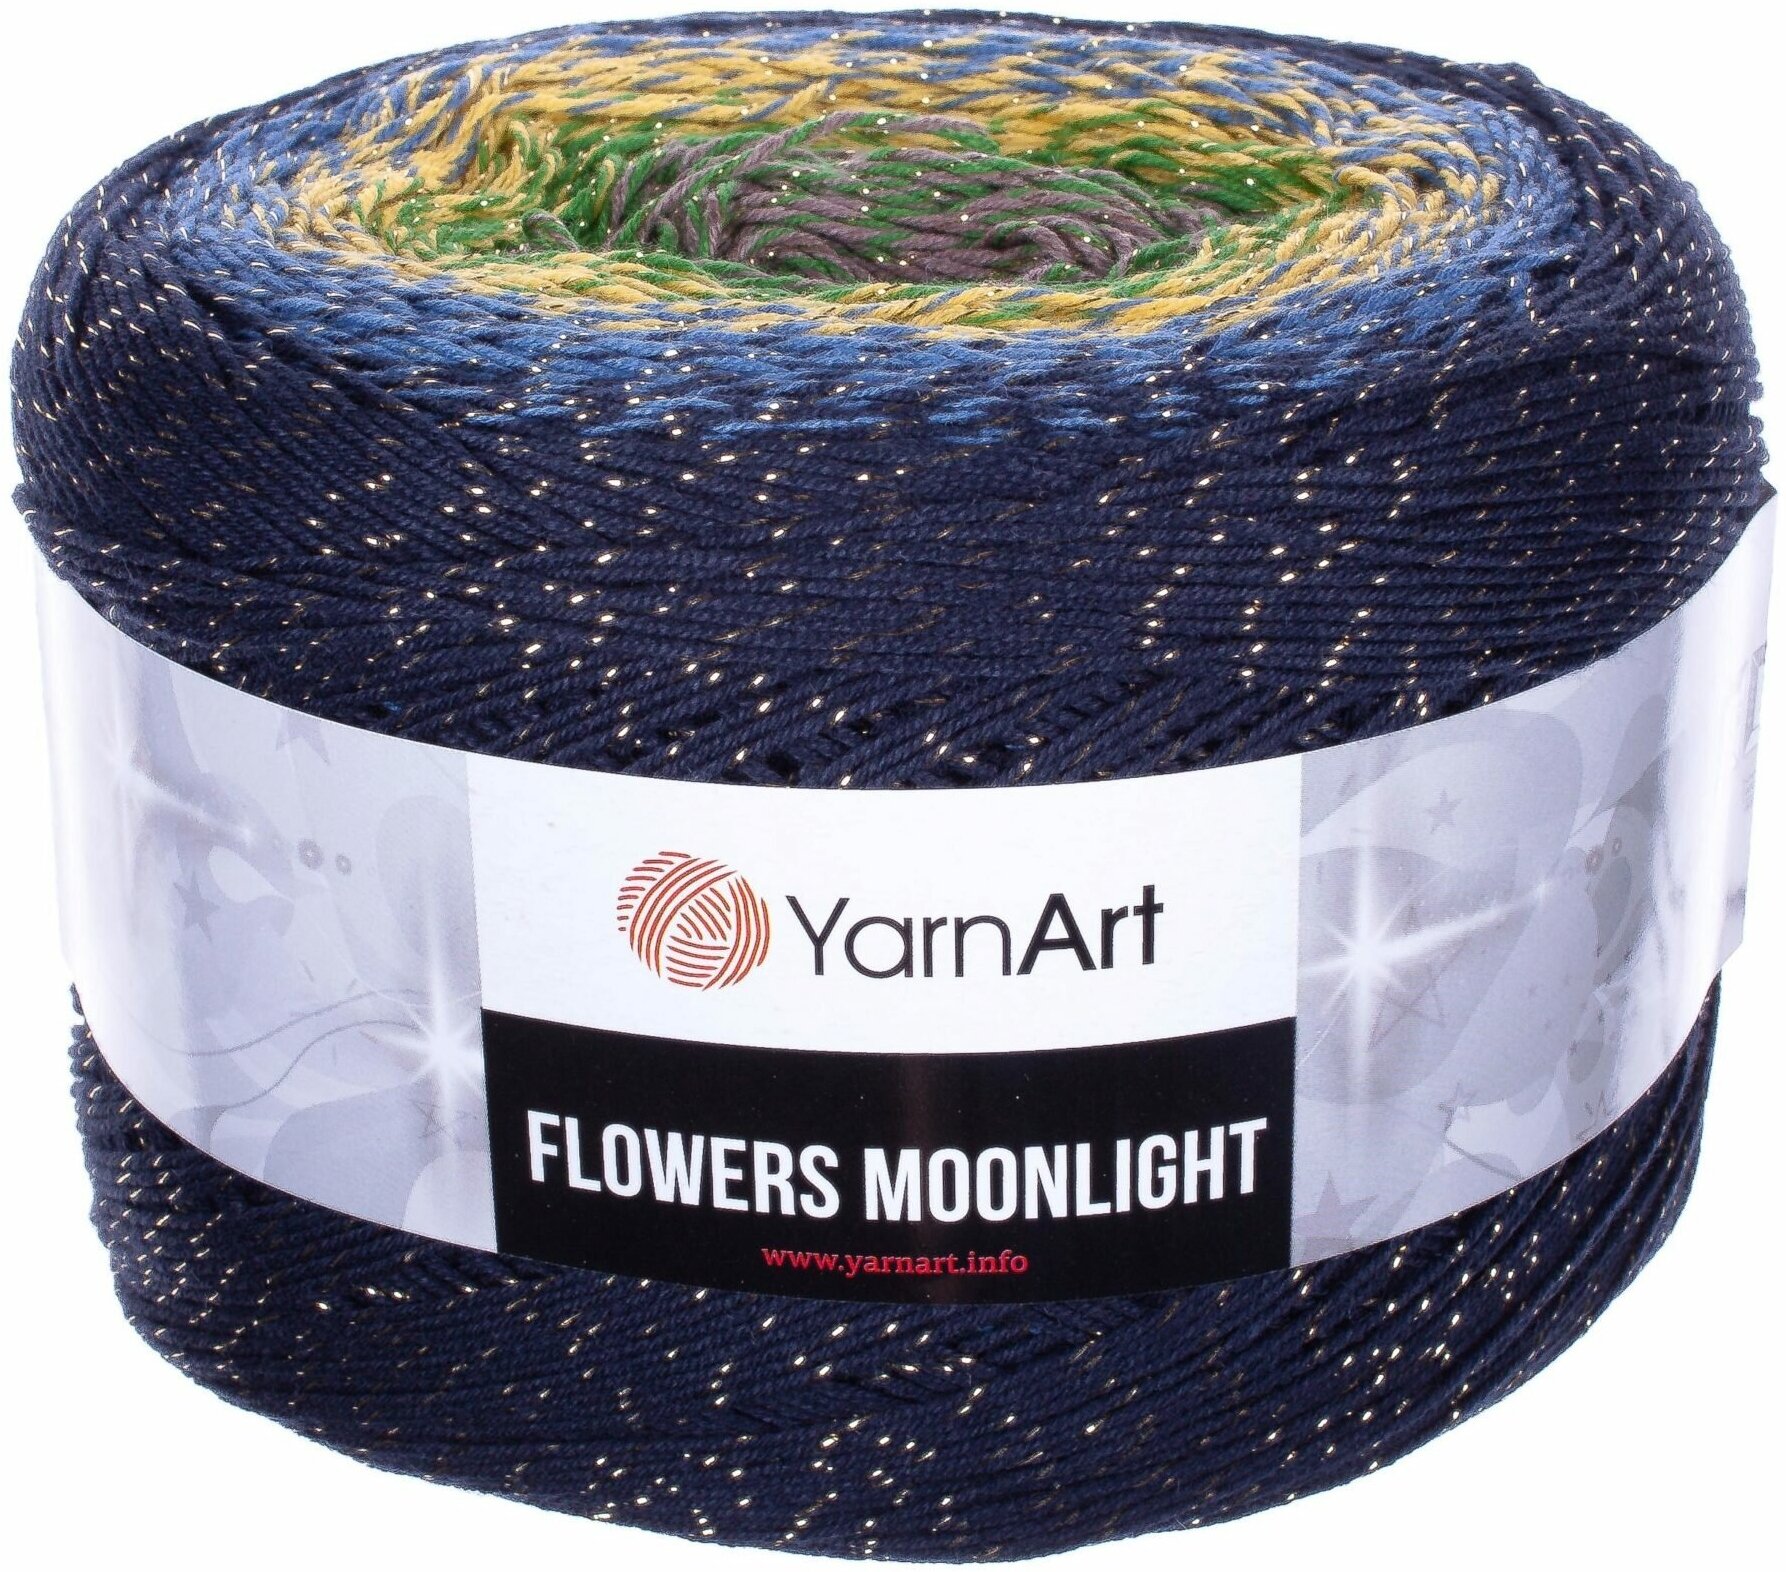 Пряжа YarnArt Flowers Moonlight темно синий-желтый-зеленый серый (3250), 53%хлопок/43%акрил/4%металлик, 1000м, 260г, 1шт